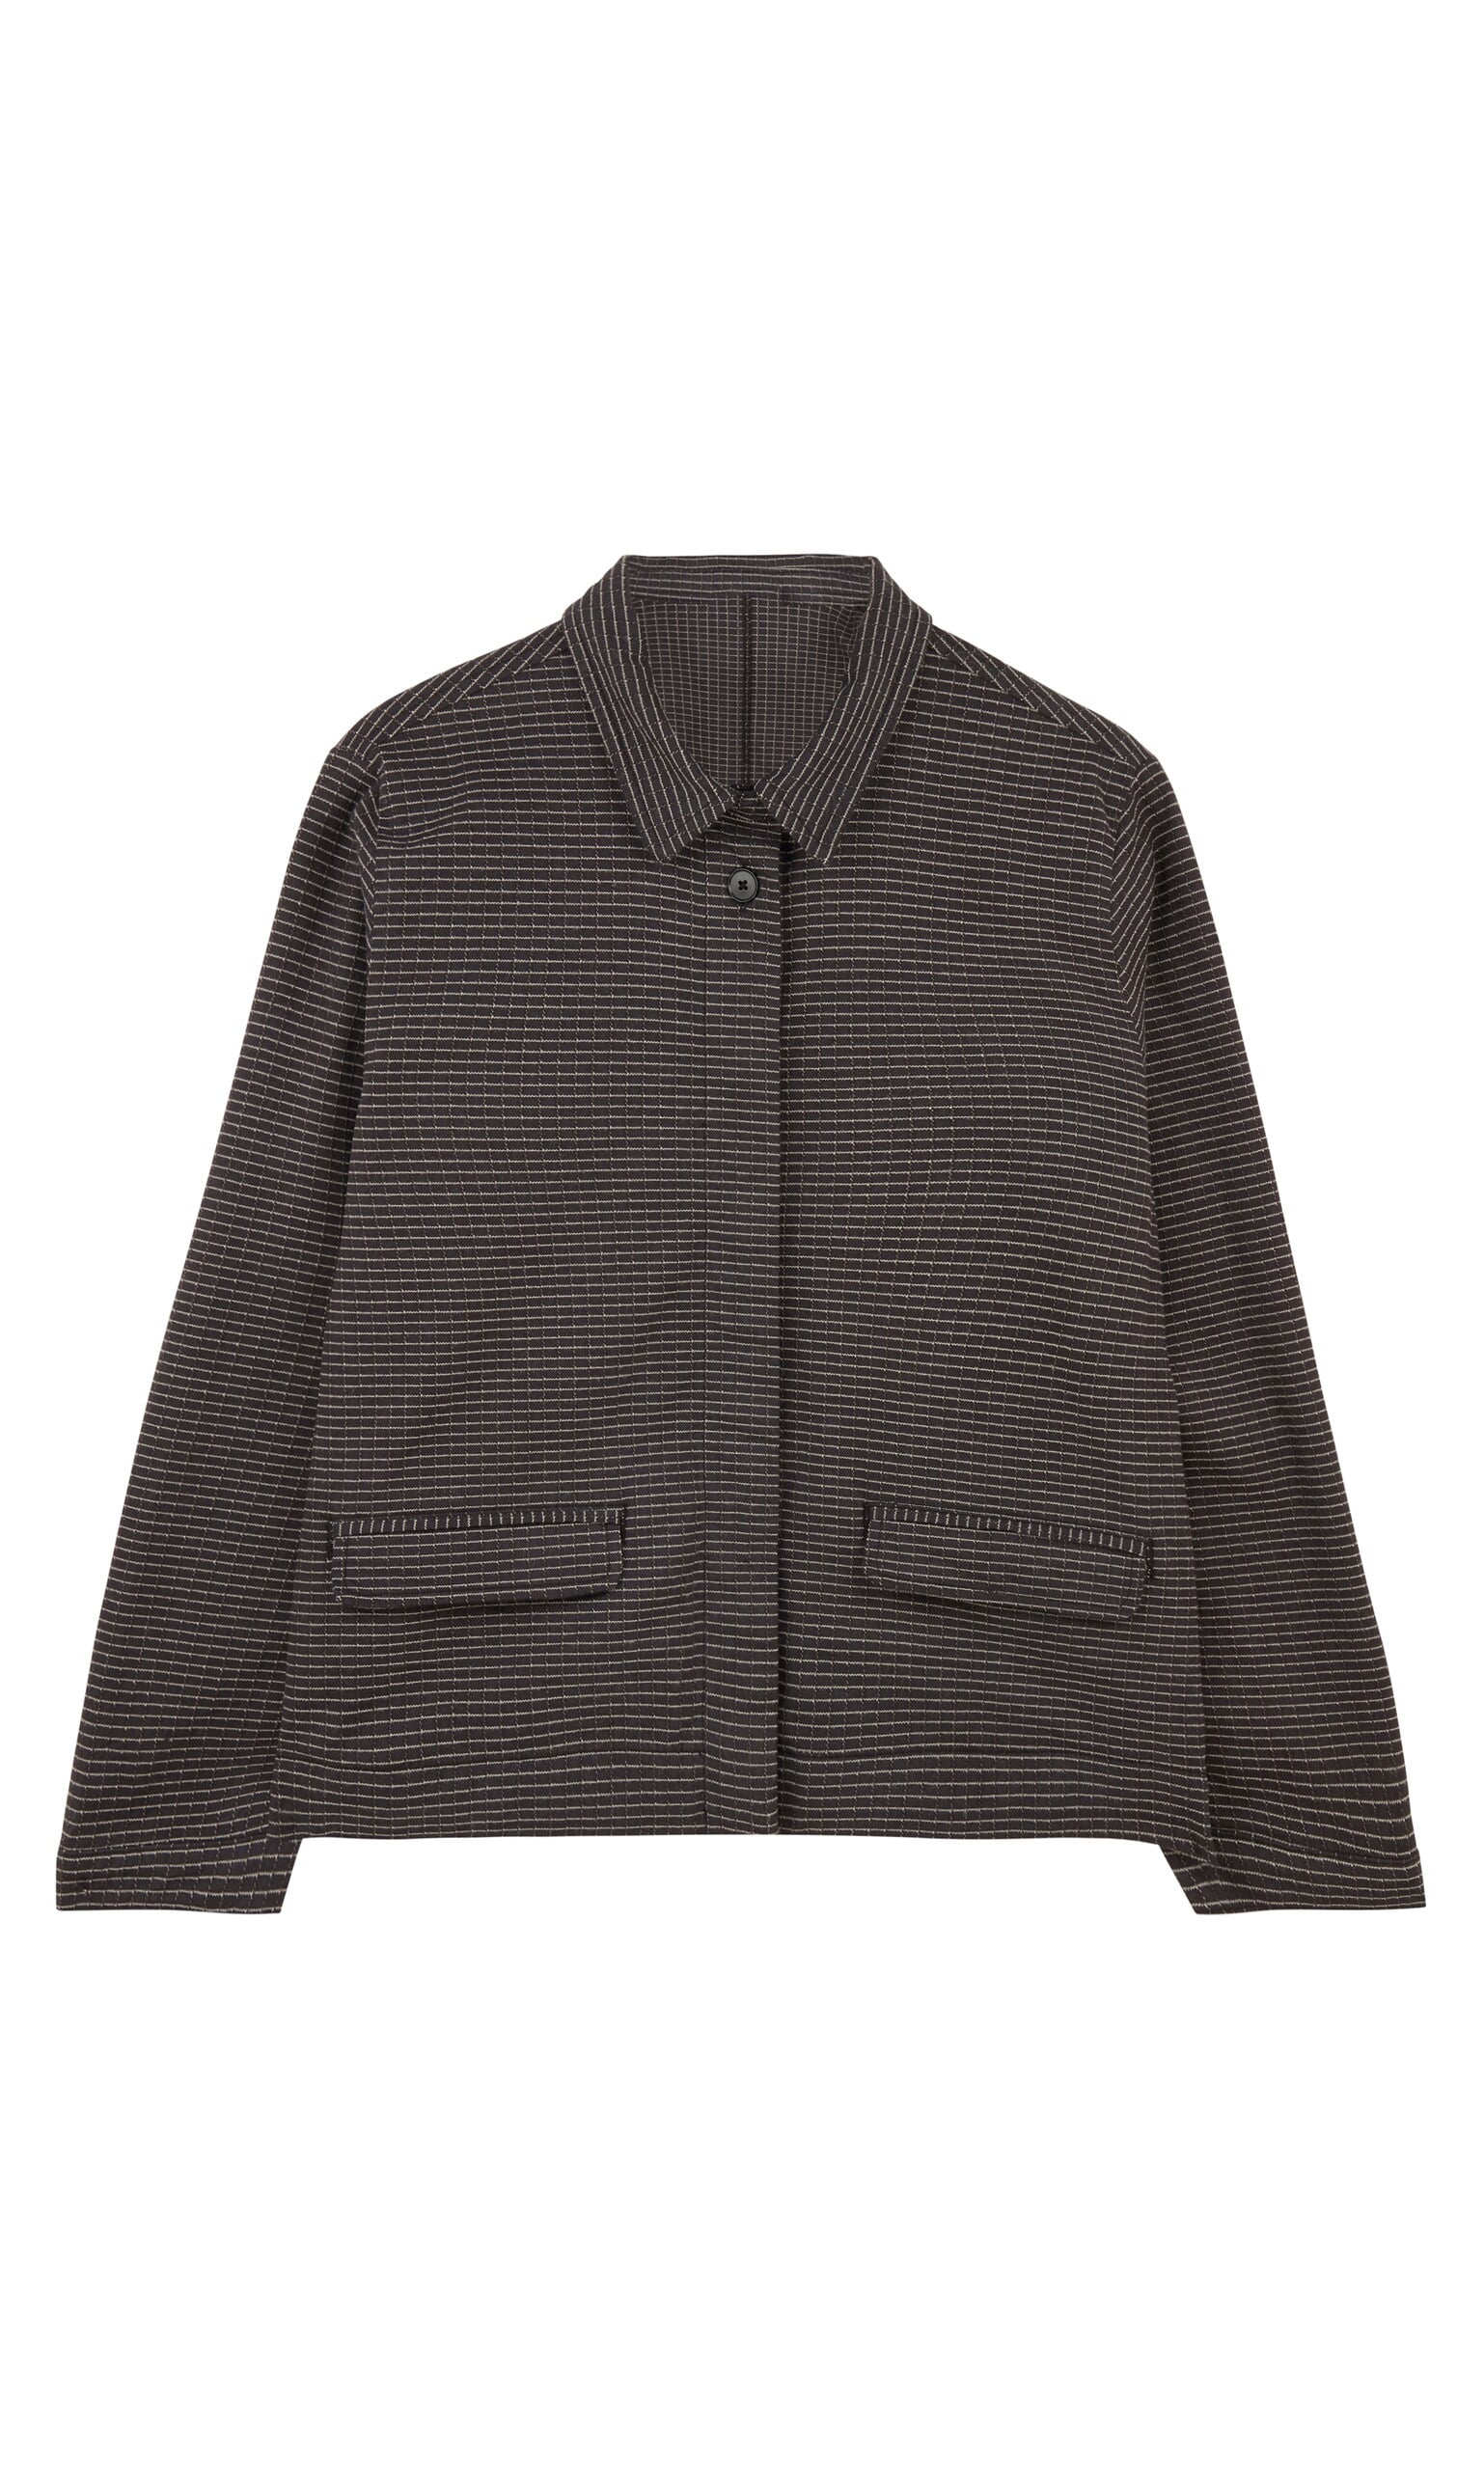 Black comb jacket - Plümo Ltd